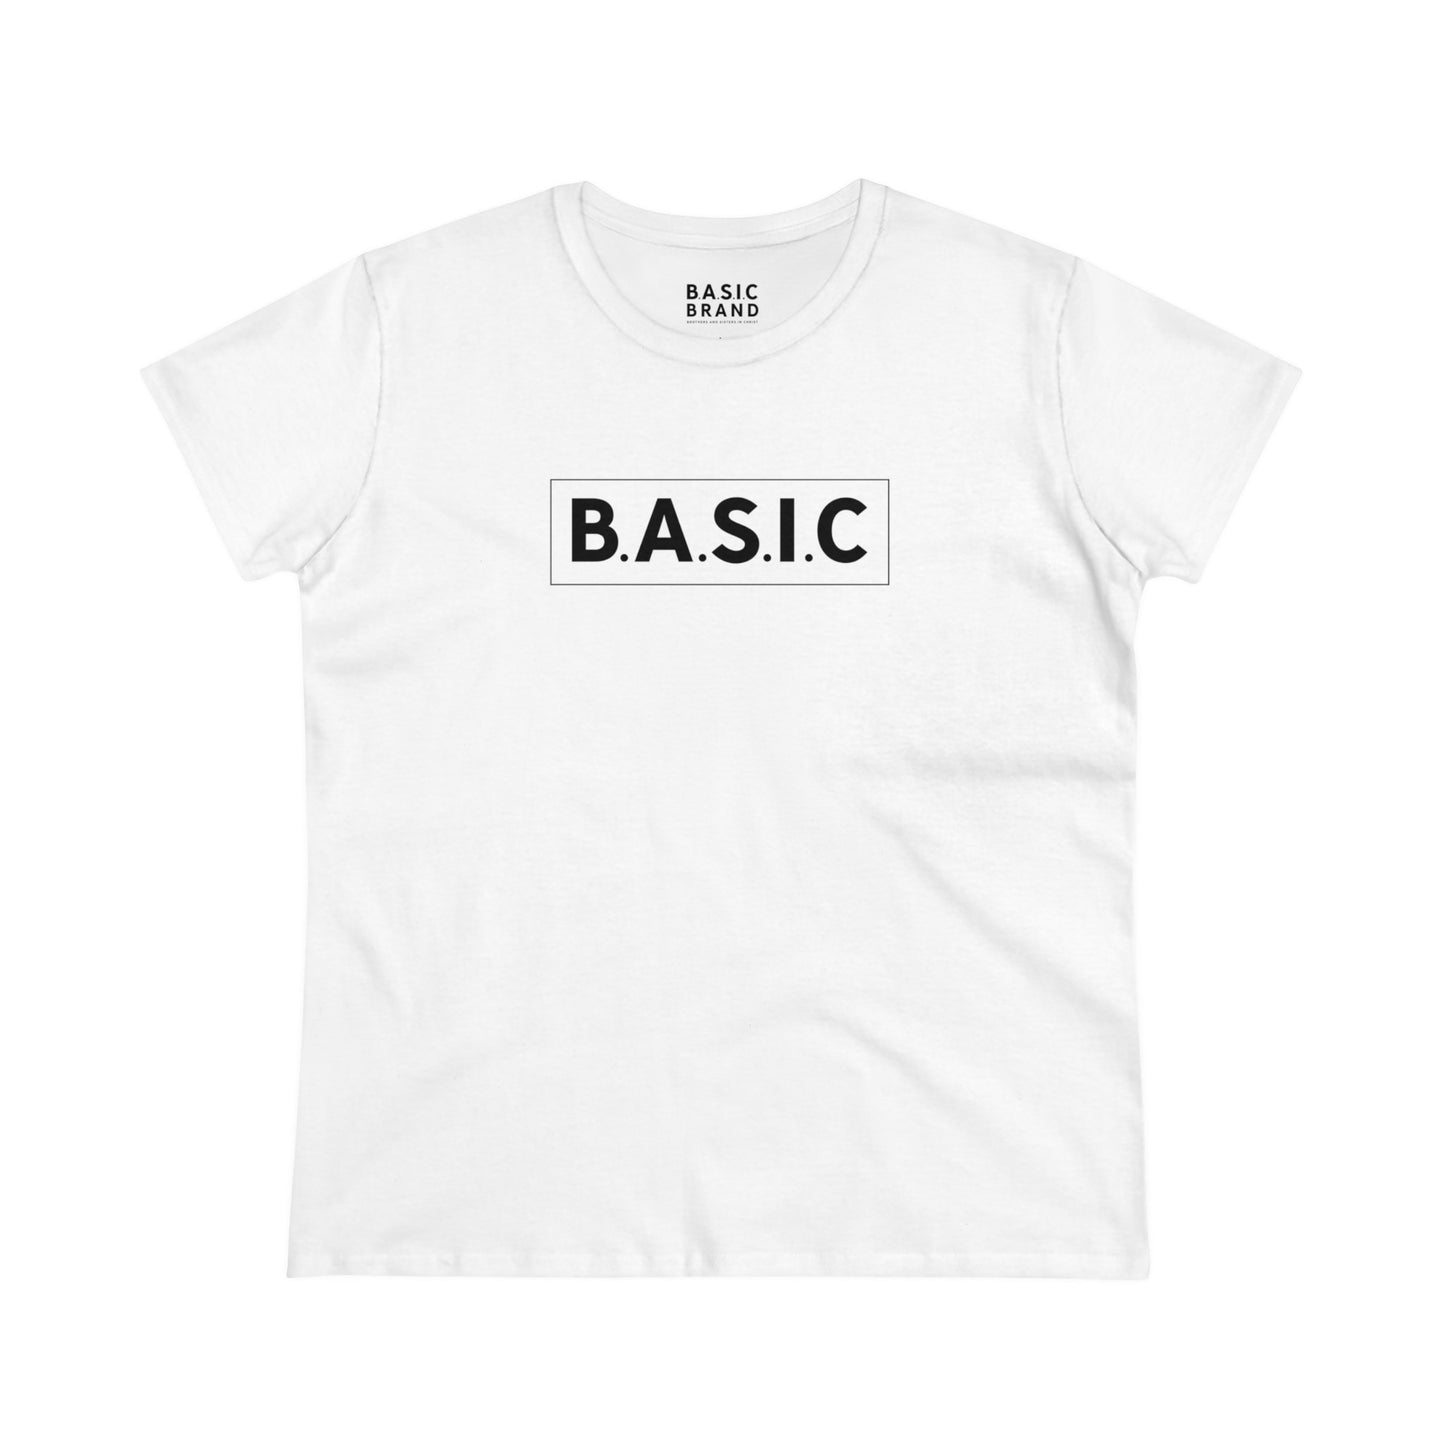 Women's B.A.S.I.C "Medium Boxed Logo" Tee Shirt